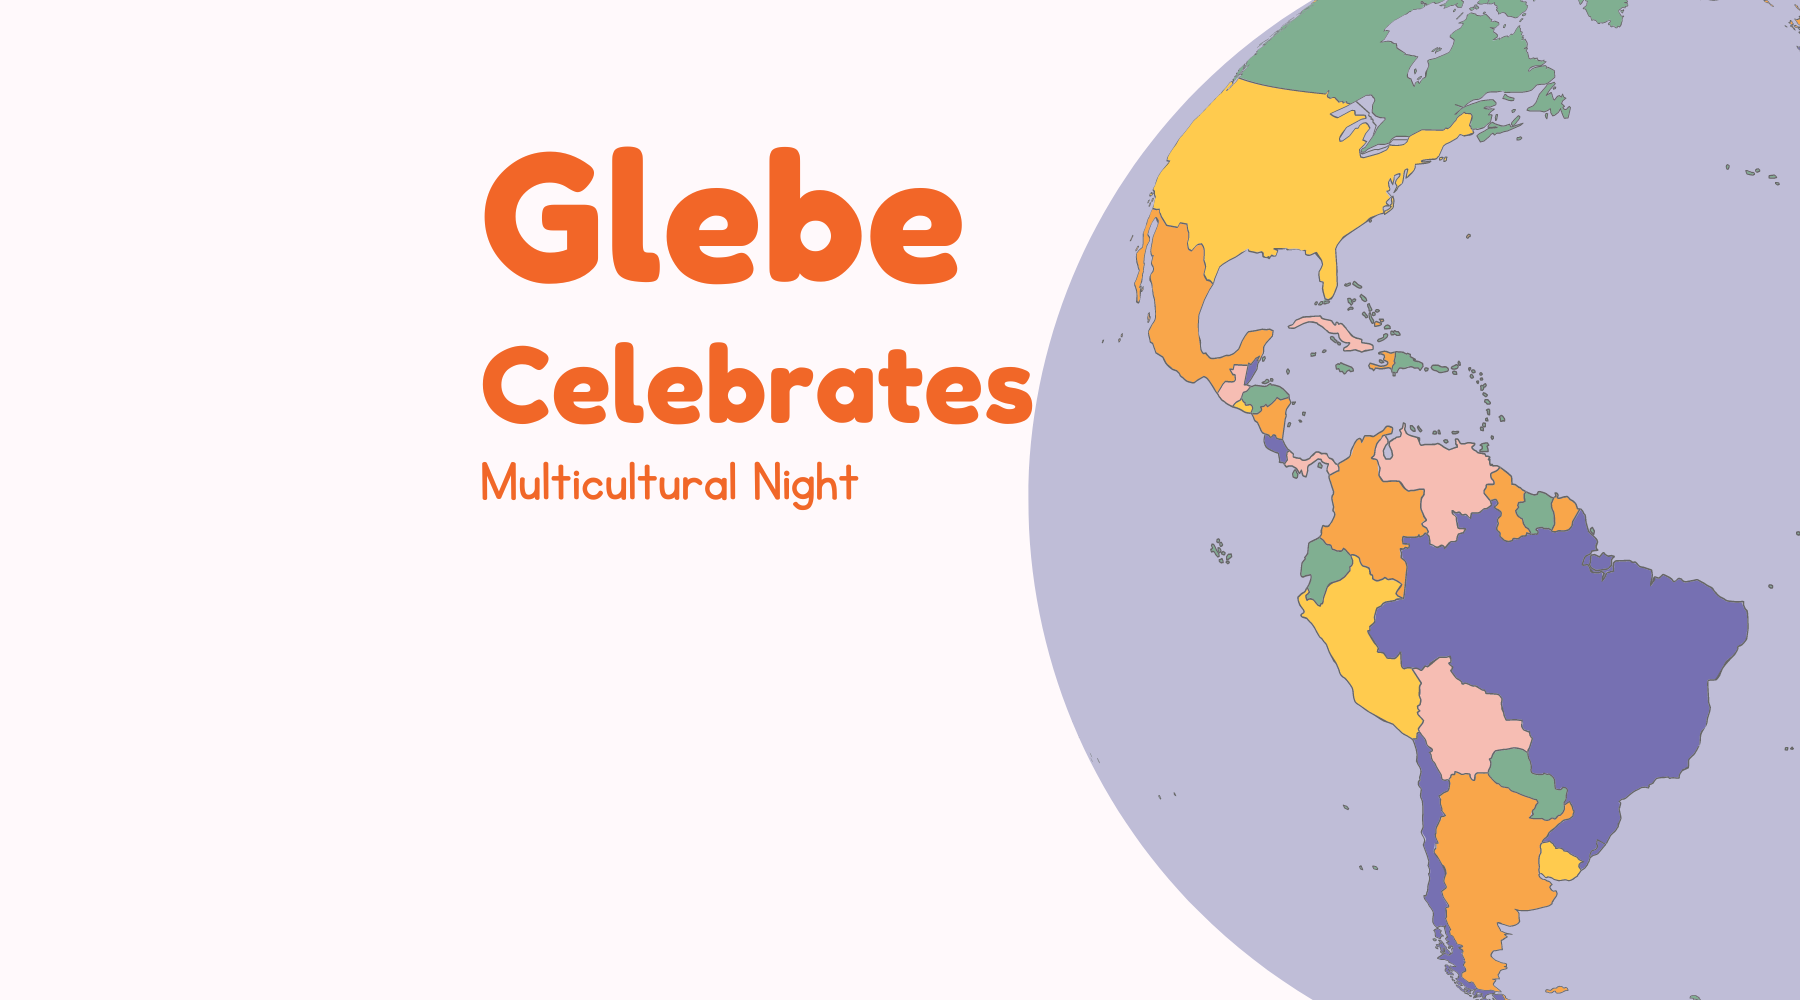 Glebe Celebrates Multicultural Night